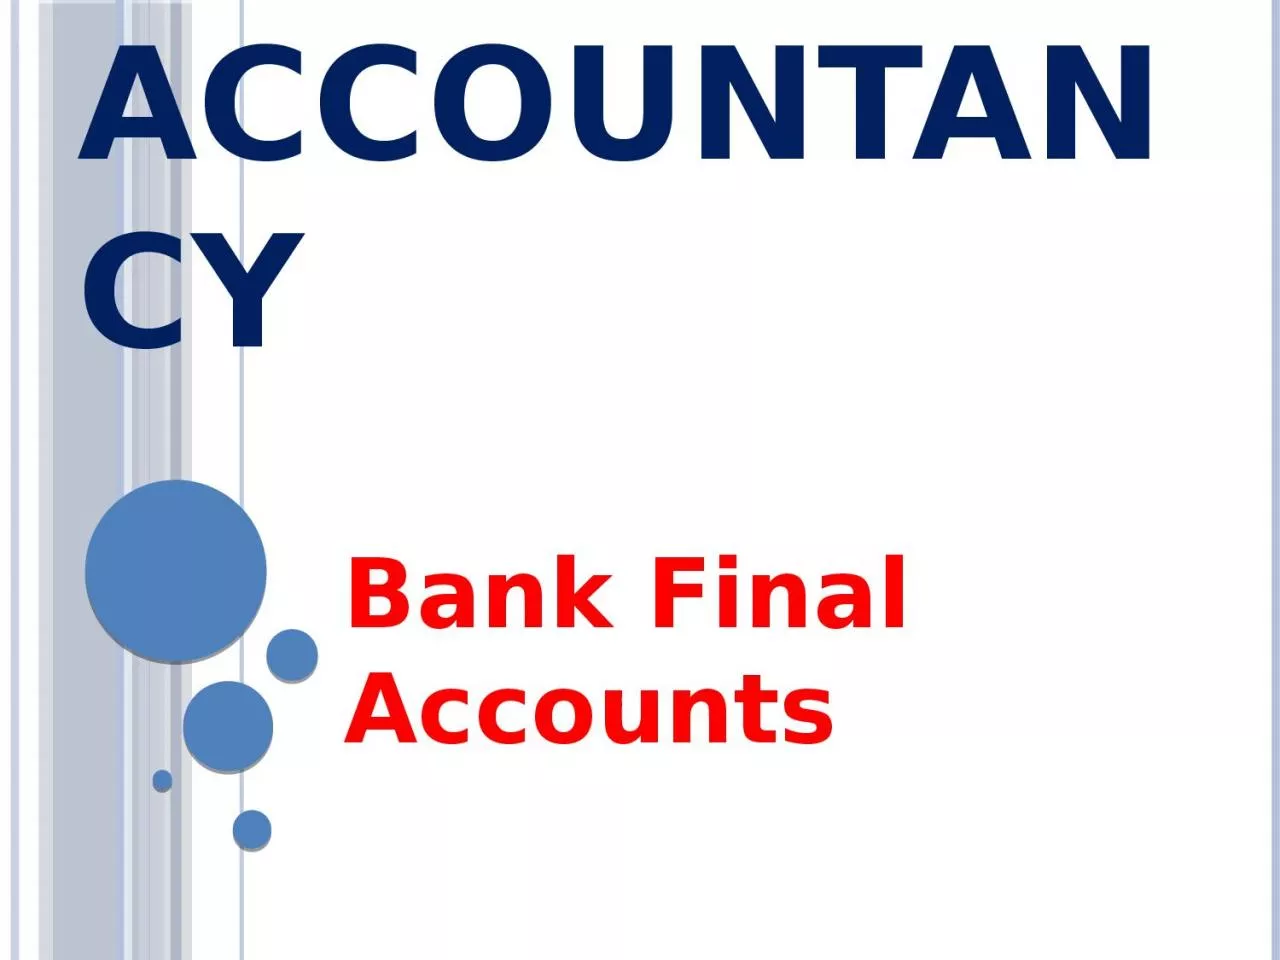 A dvanced accountancy Bank